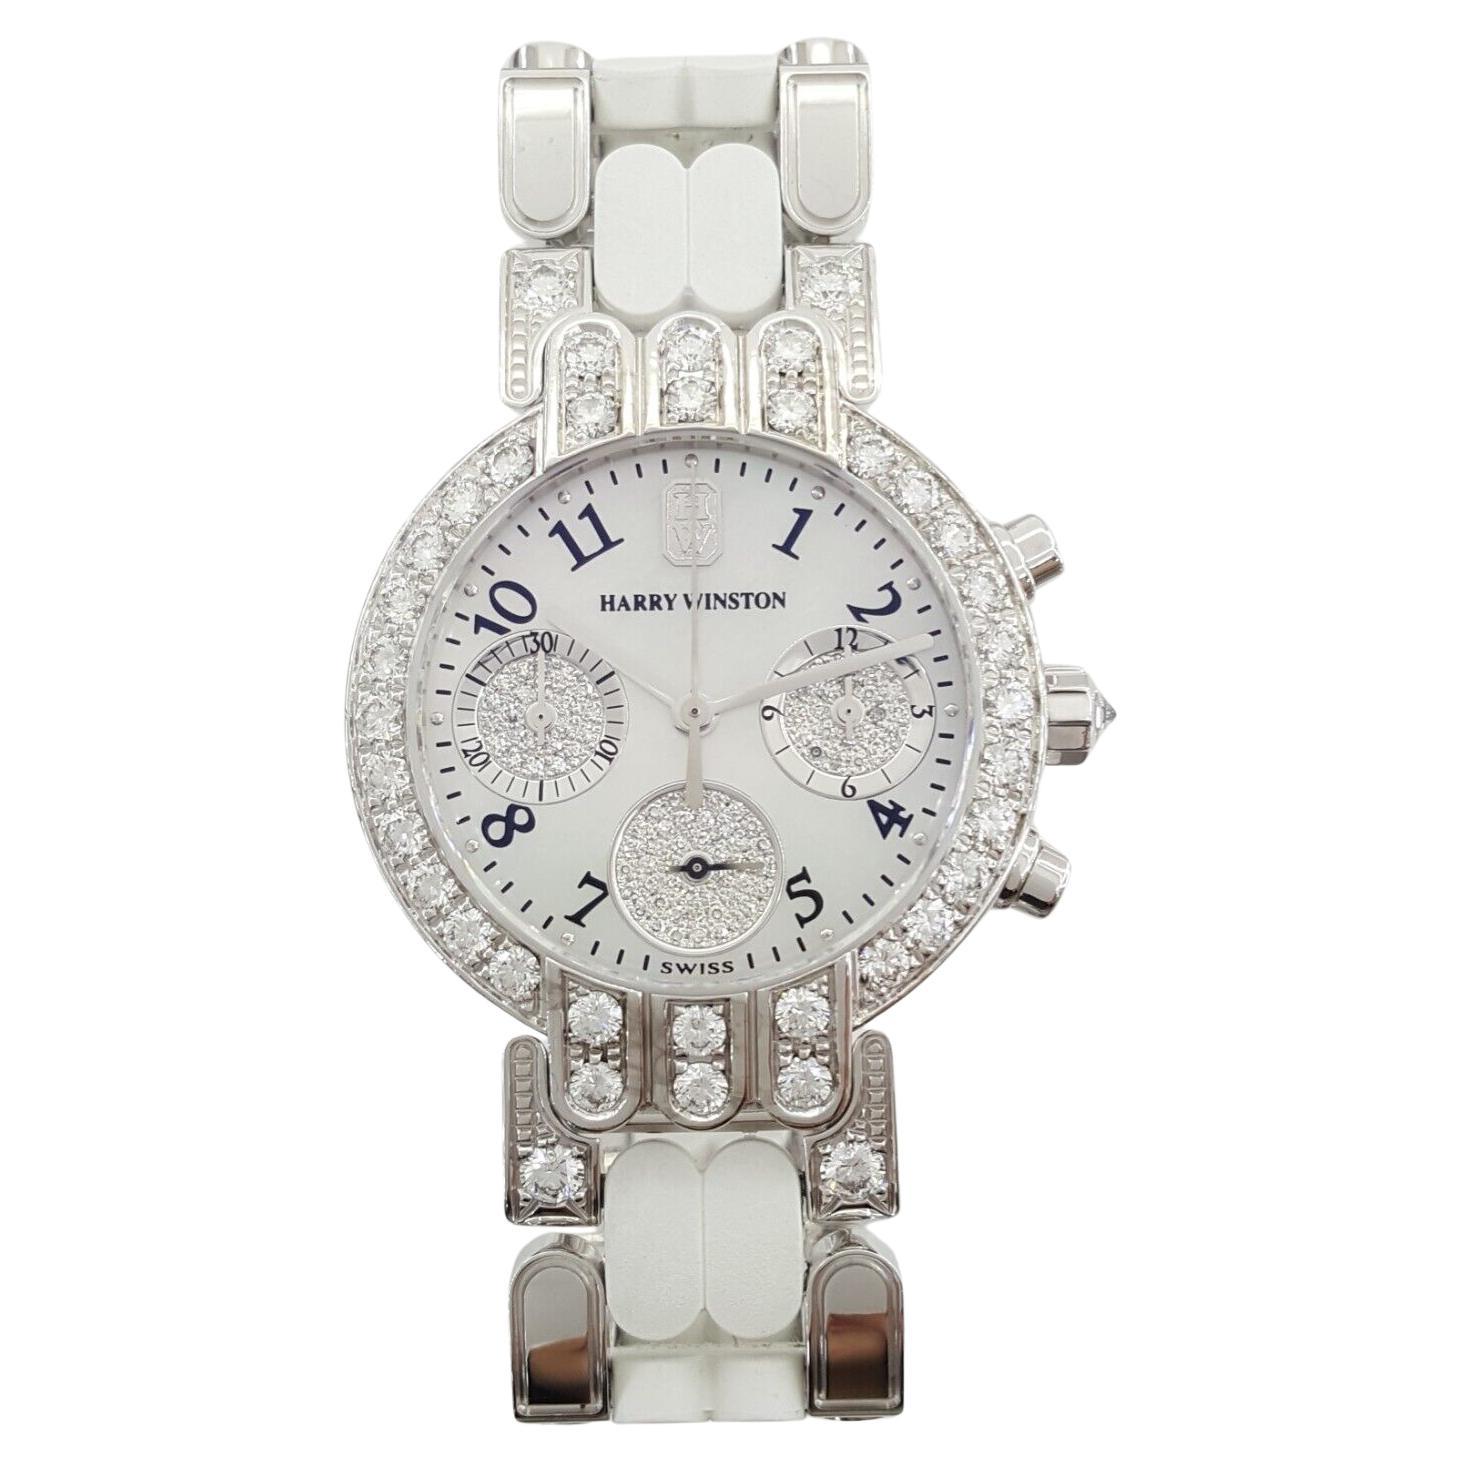  Harry Winston Premier Chronograph Automatic Watch 18k White Gold Diamonds For Sale 1